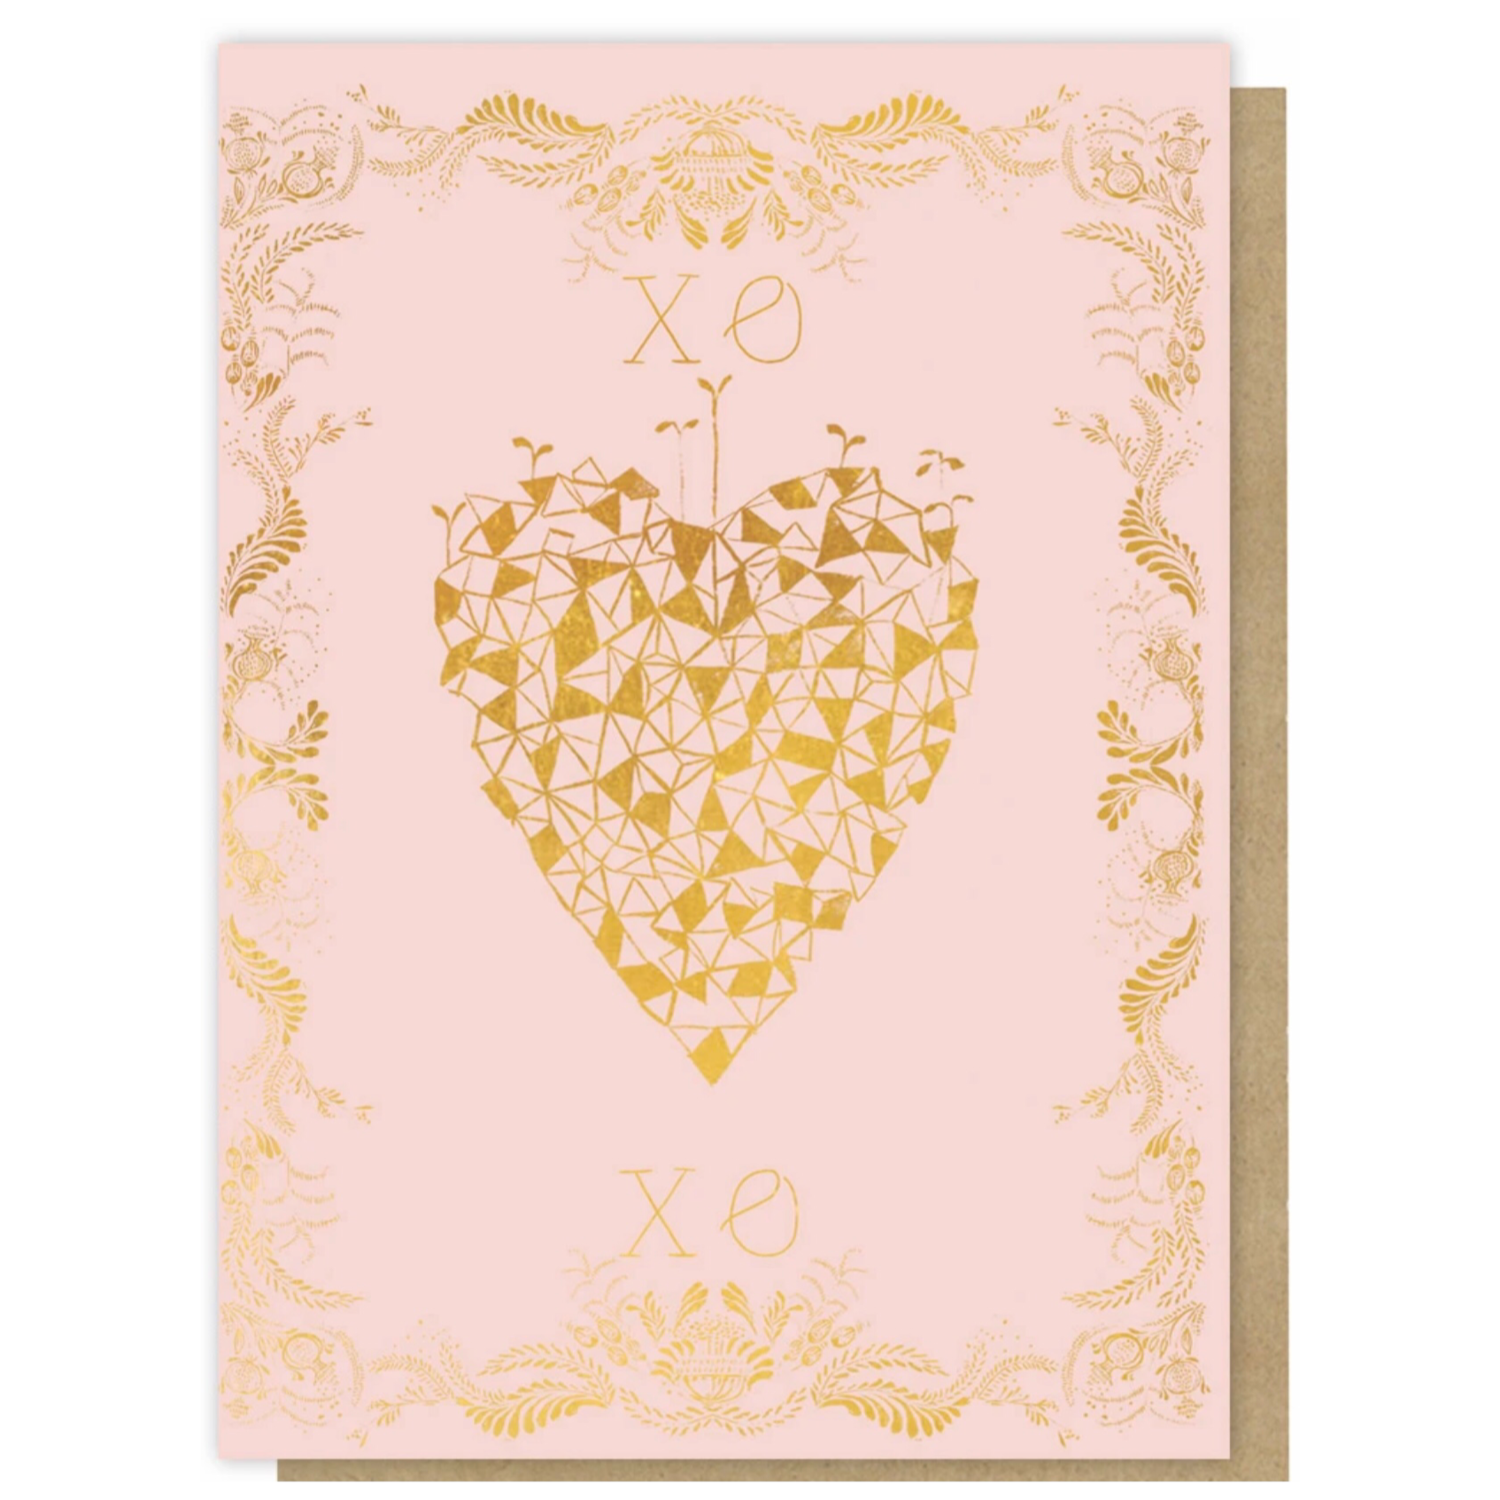 XOXO Sweet Heart Greeting Card - PAC29